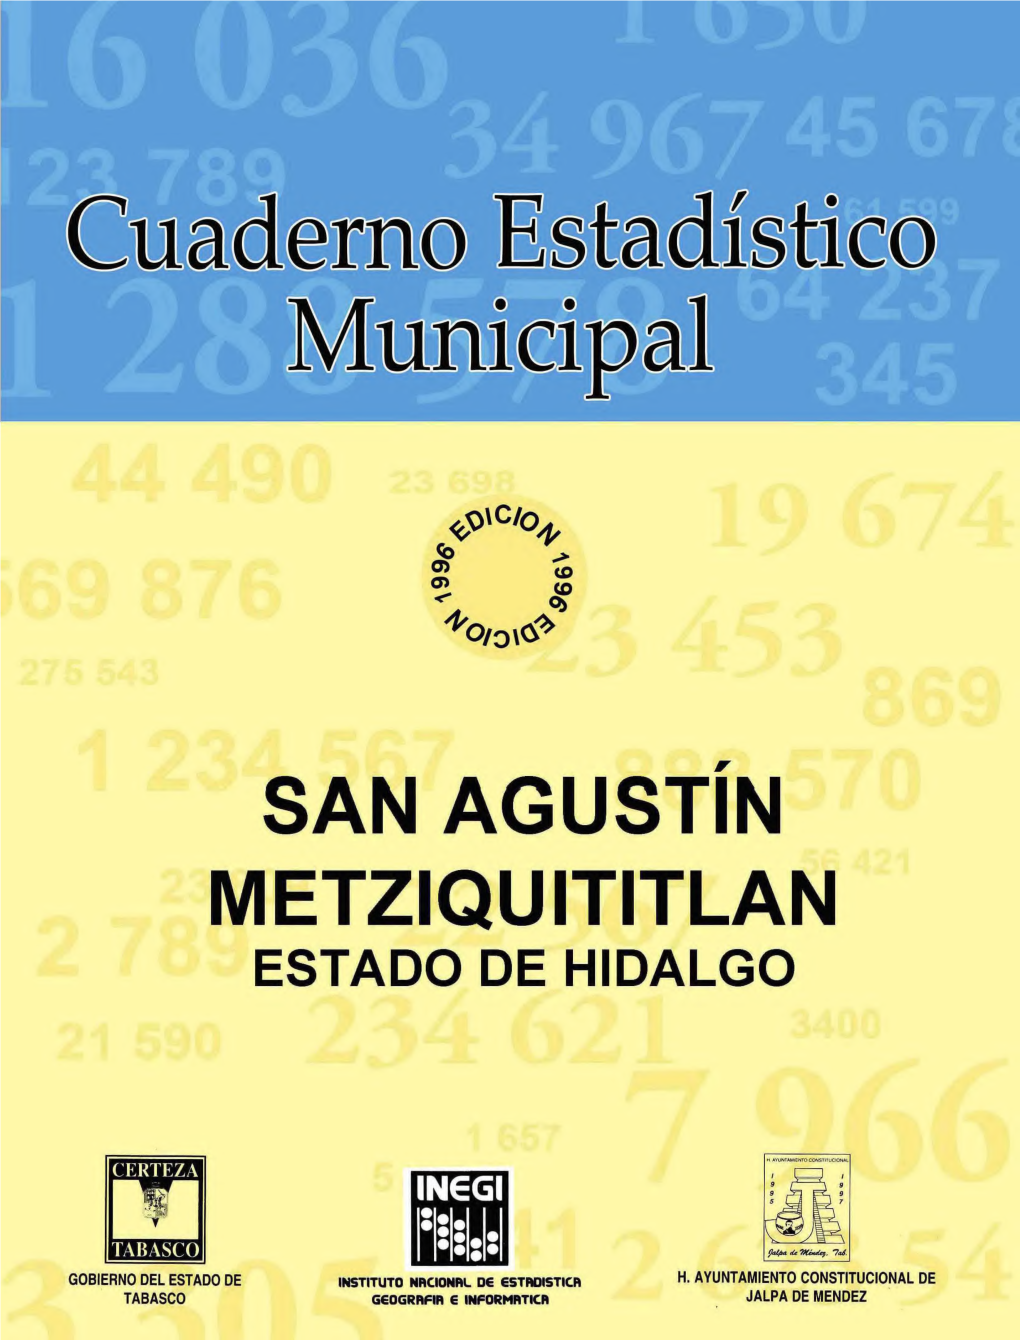 San Agustín Metzquititlán Estado De Hidalgo Cuaderno Estadístico Municipal Edición 1996